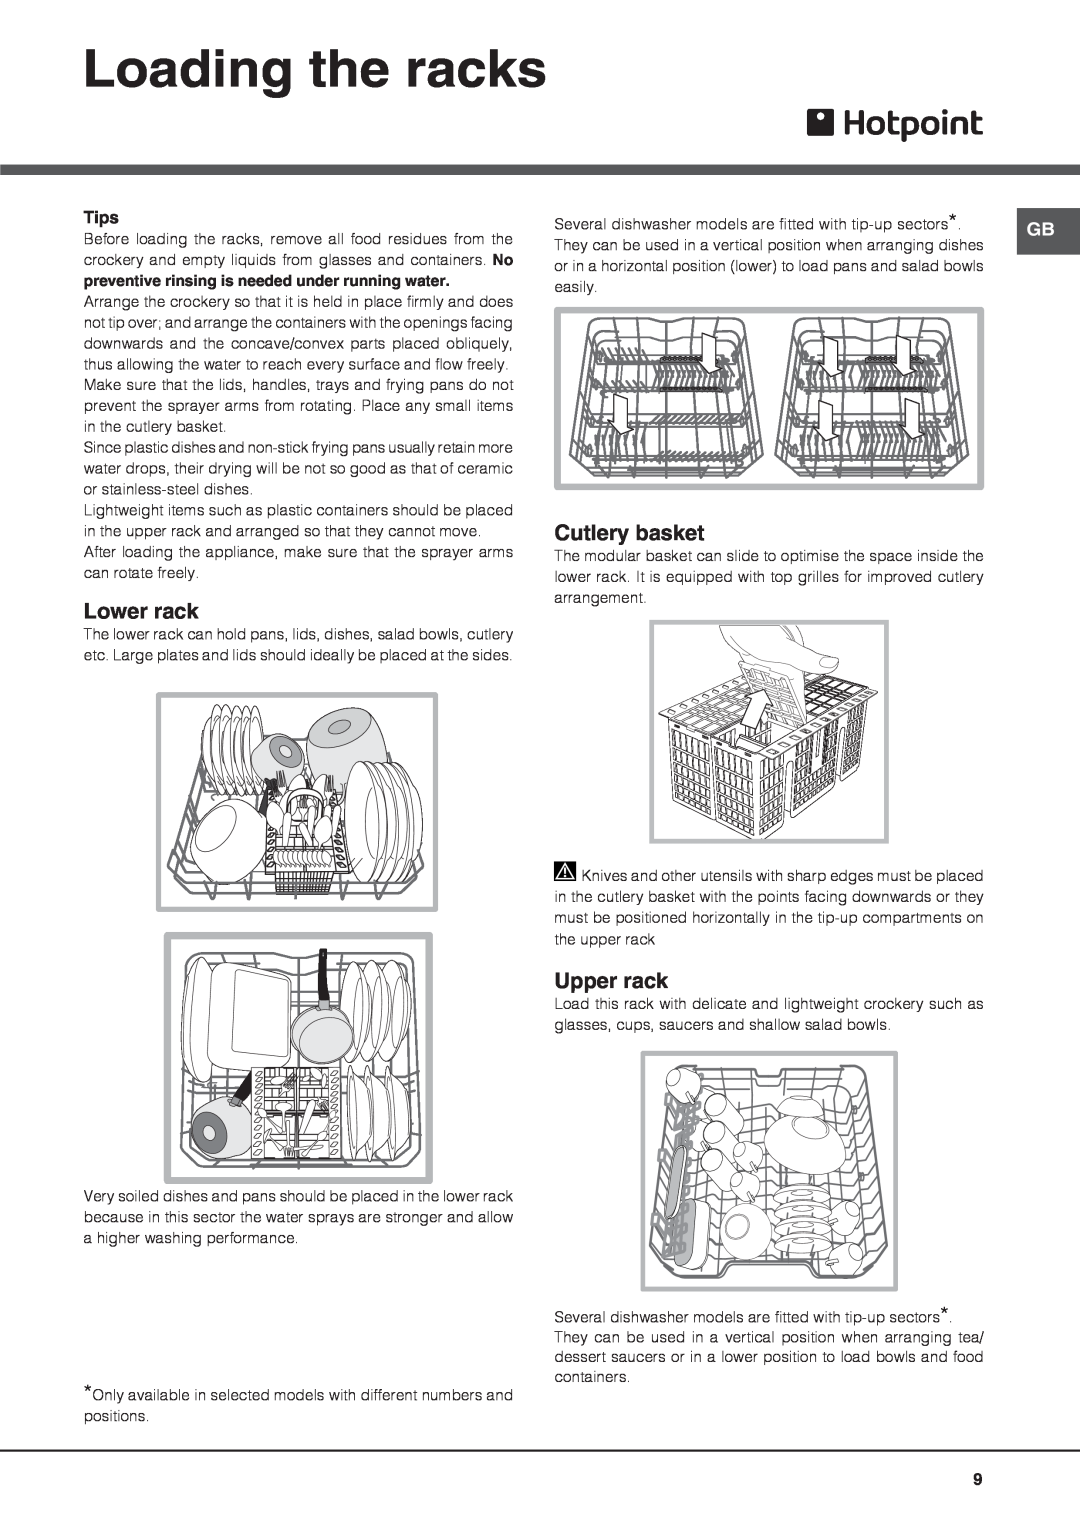 Hotpoint FDYF 11011 Style manual Loading the racks, Lower rack, Cutlery basket, Upper rack, Tips 